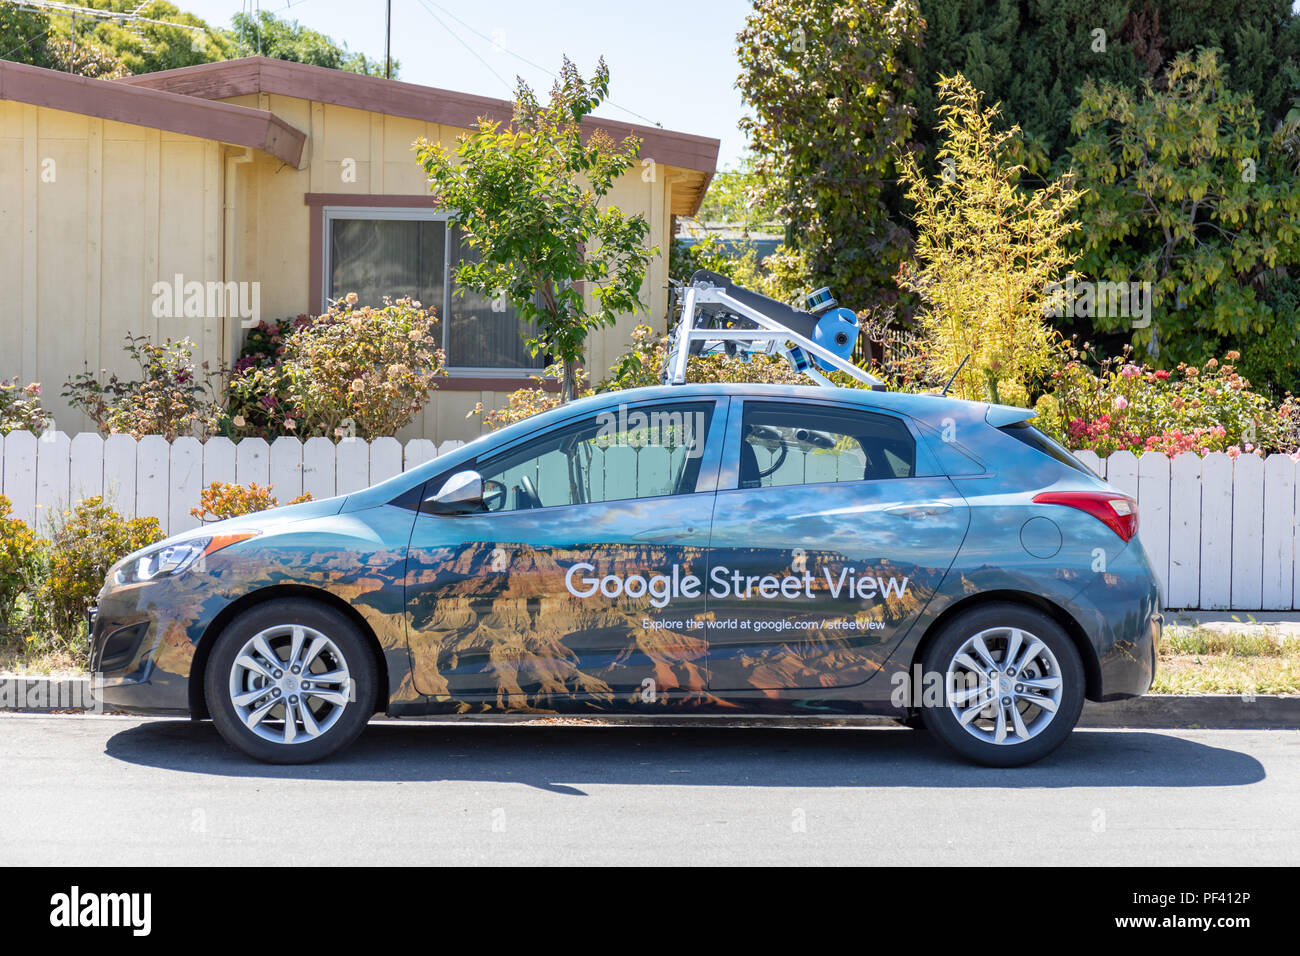 Google Street View camera car; California, USA Stock Photo